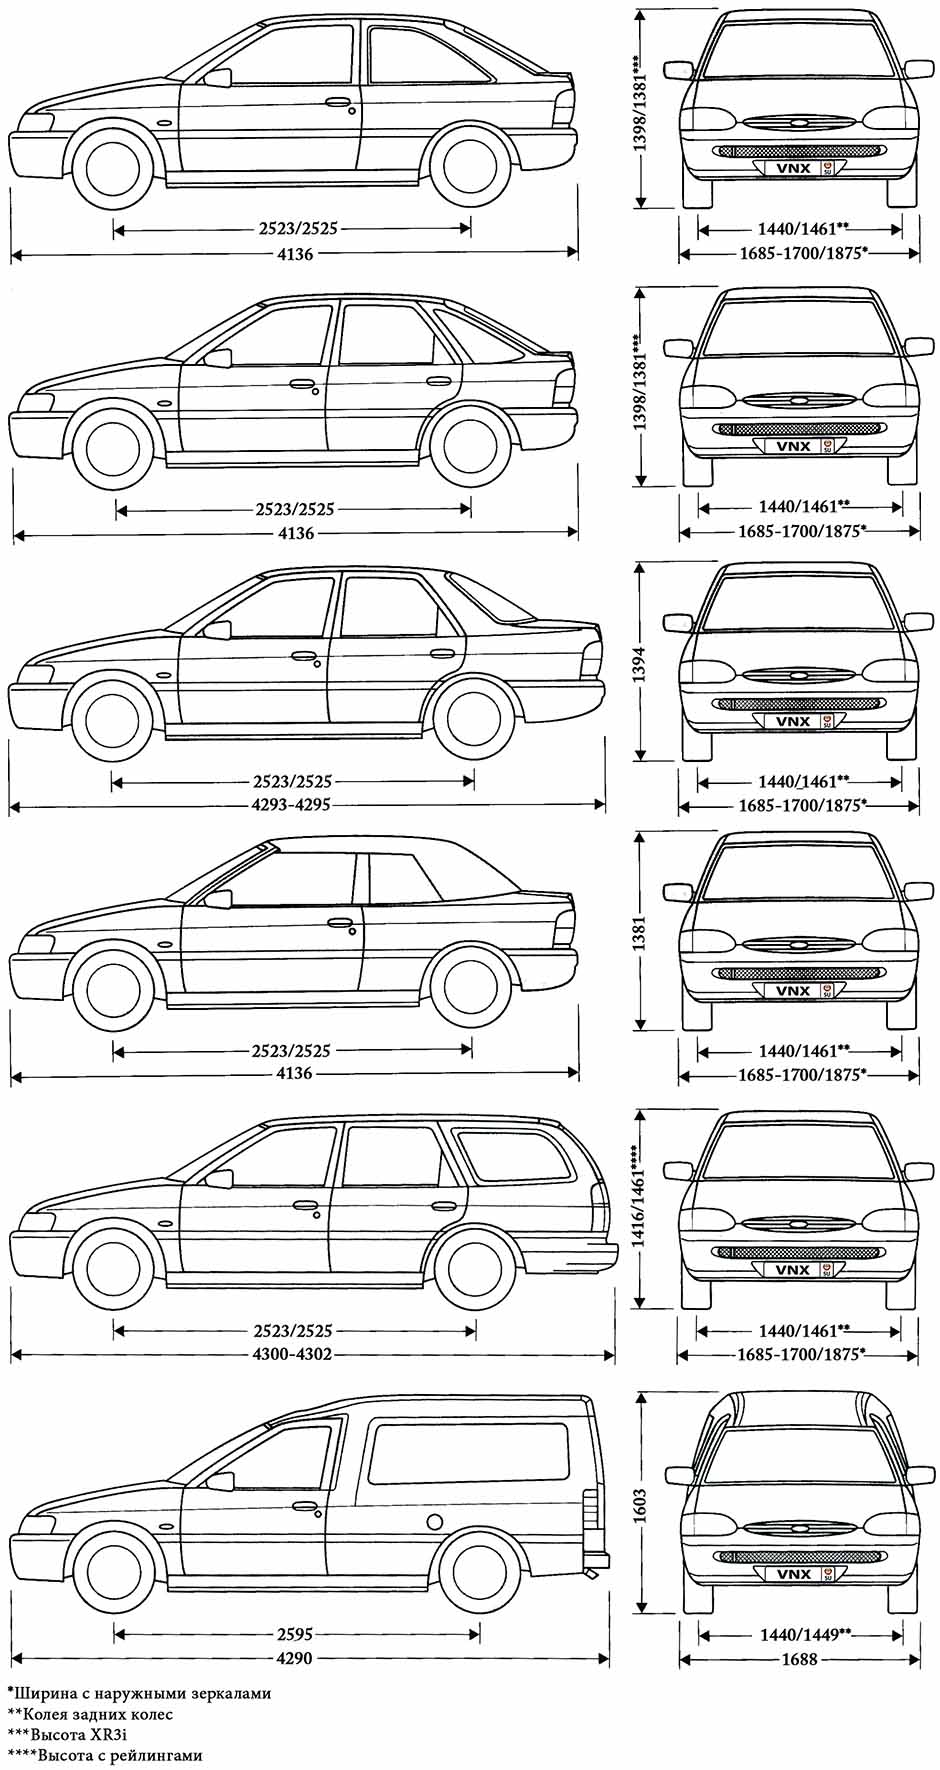 Габаритные размеры Форд Эскорт 1996-2000 (dimensions Ford Escort Mk 6/7)